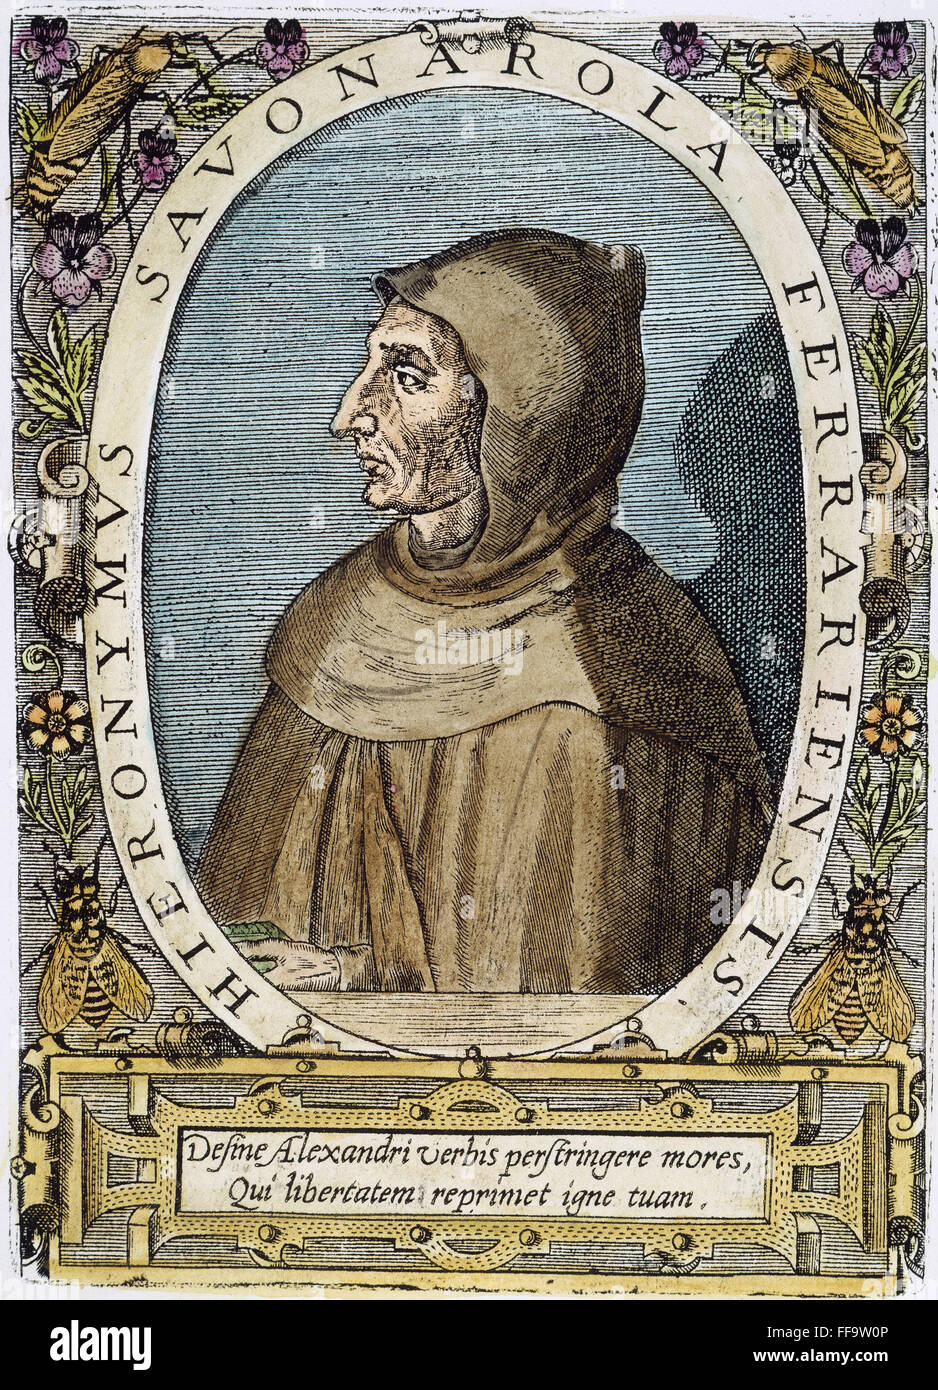 GIROLAMO SAVONAROLA /n(1452-1498). Italienischer Reformator. Holzschnitt aus dem 16. Jahrhundert. Stockfoto